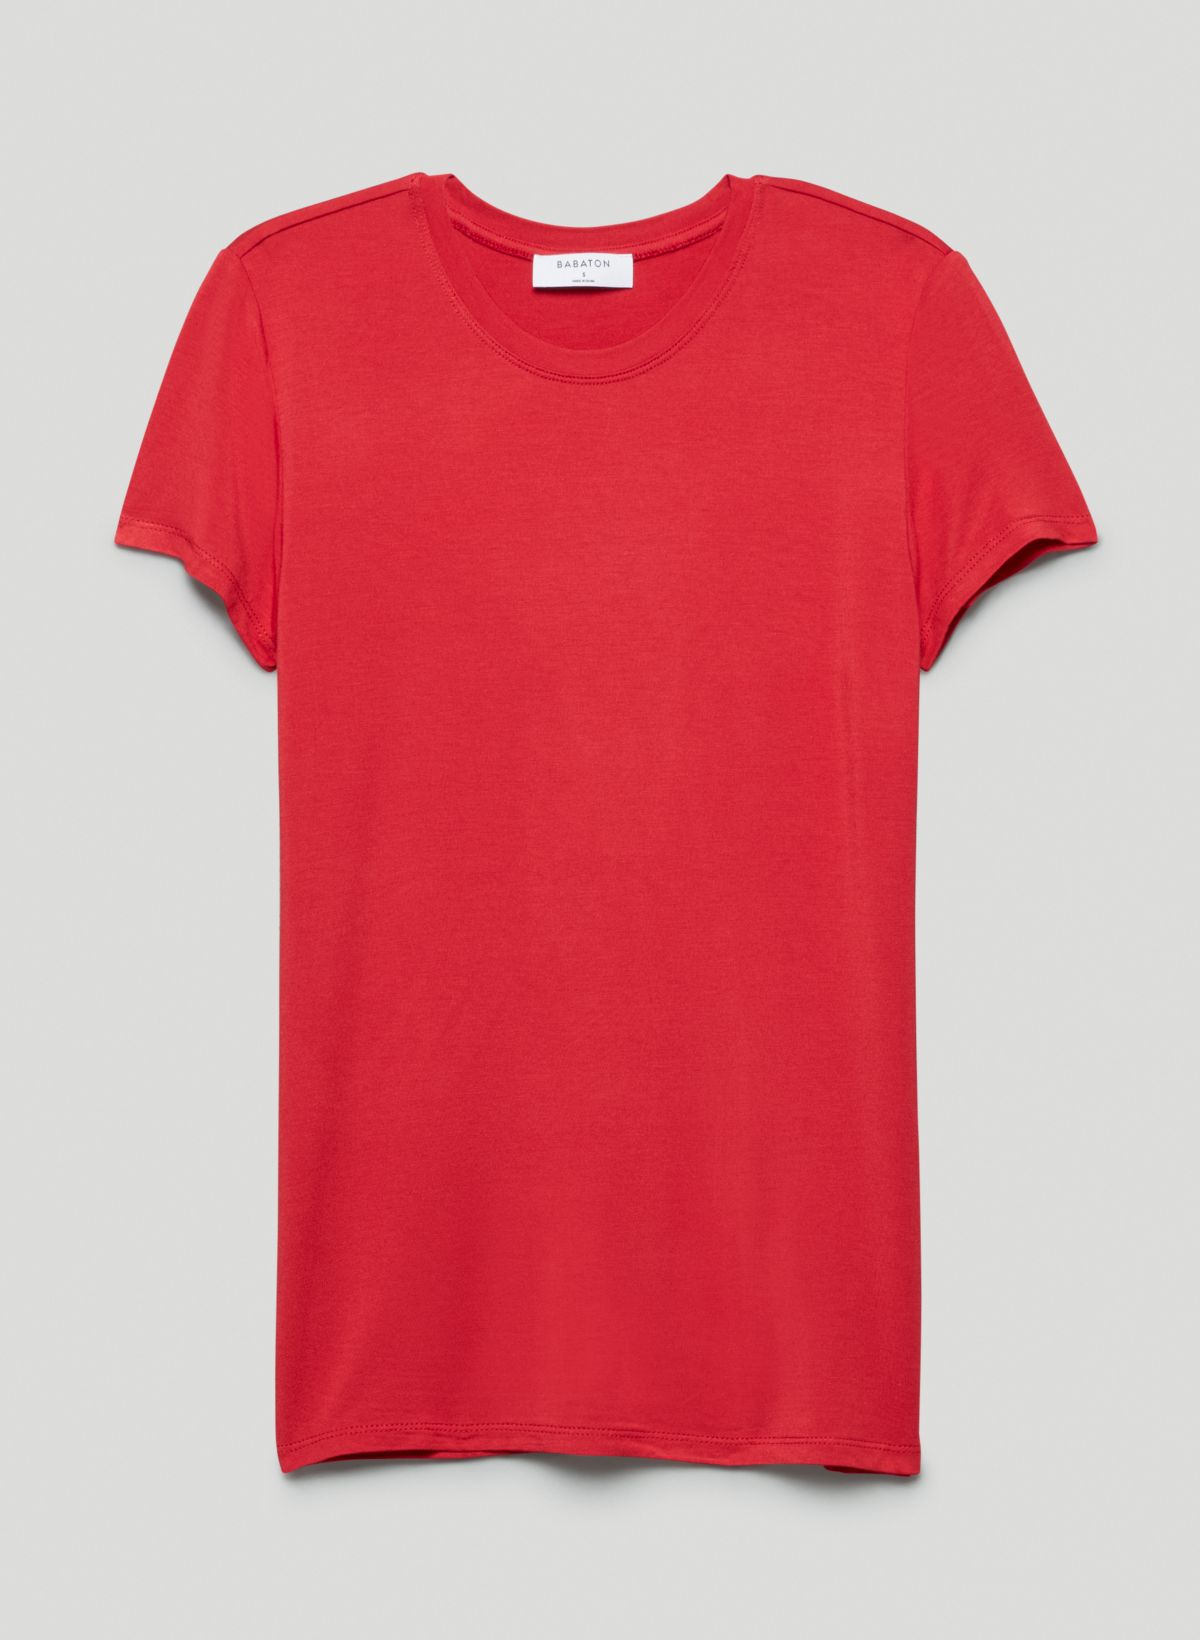 Babaton Women's Everyday T-Shirt in Cognac Size 2XS